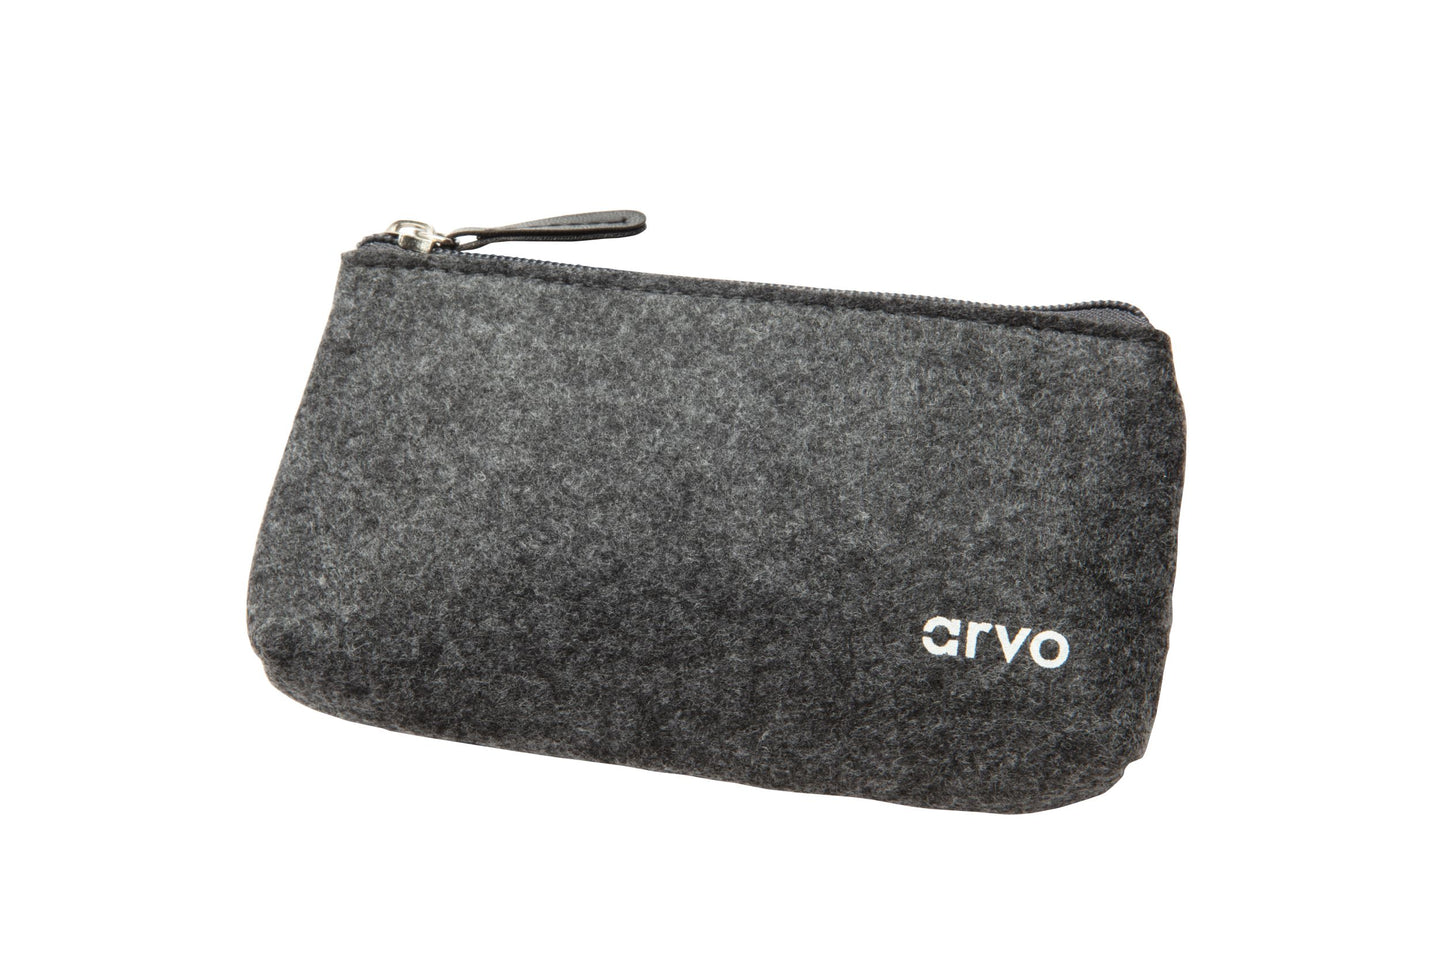 Arvo Time Traveler Watch - 38mm - Gray Leather